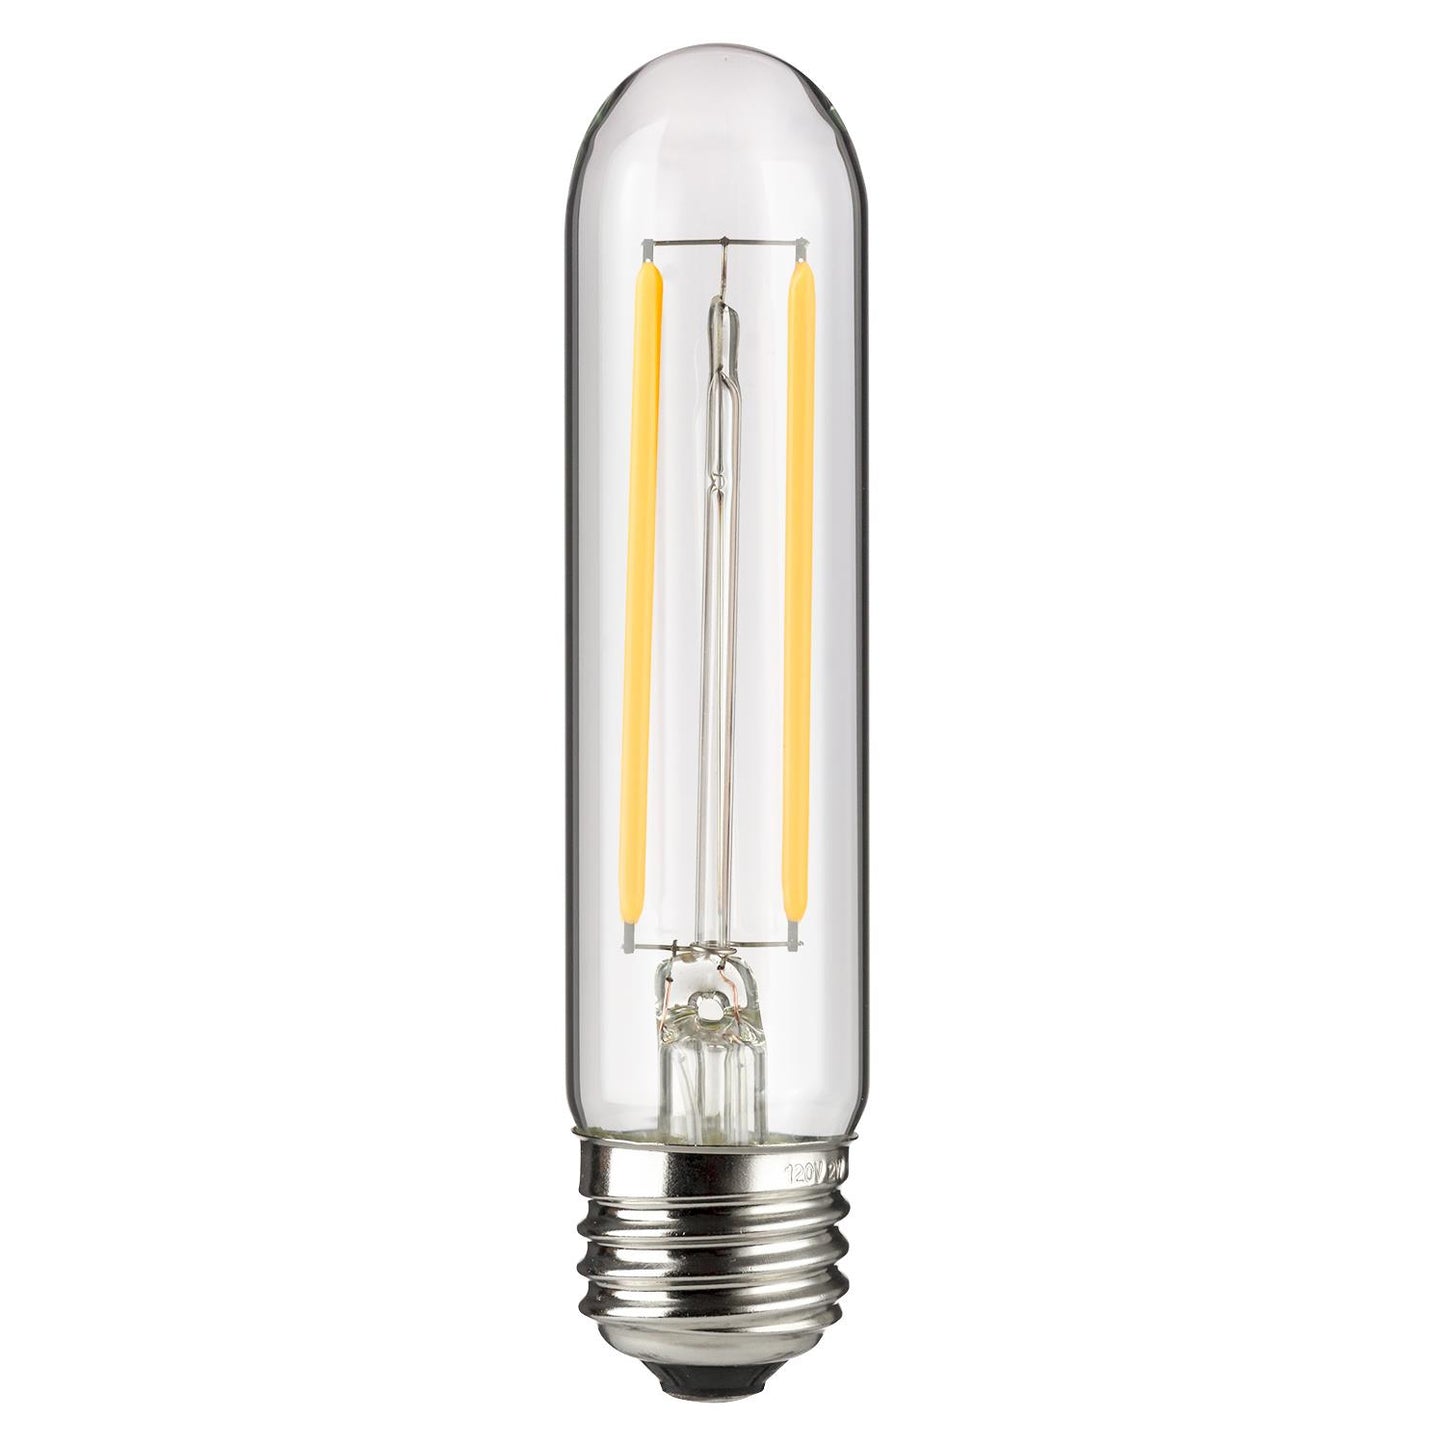 Sunlite LED Filament T10 Tubular Light Bulb, 2 Watts (25W Equivalent), 160 Lumens, Medium E26 Base, 120 Volts, Dimmable, 90 CRI, UL Listed, Clear, 4000K Cool White, 1 Pack